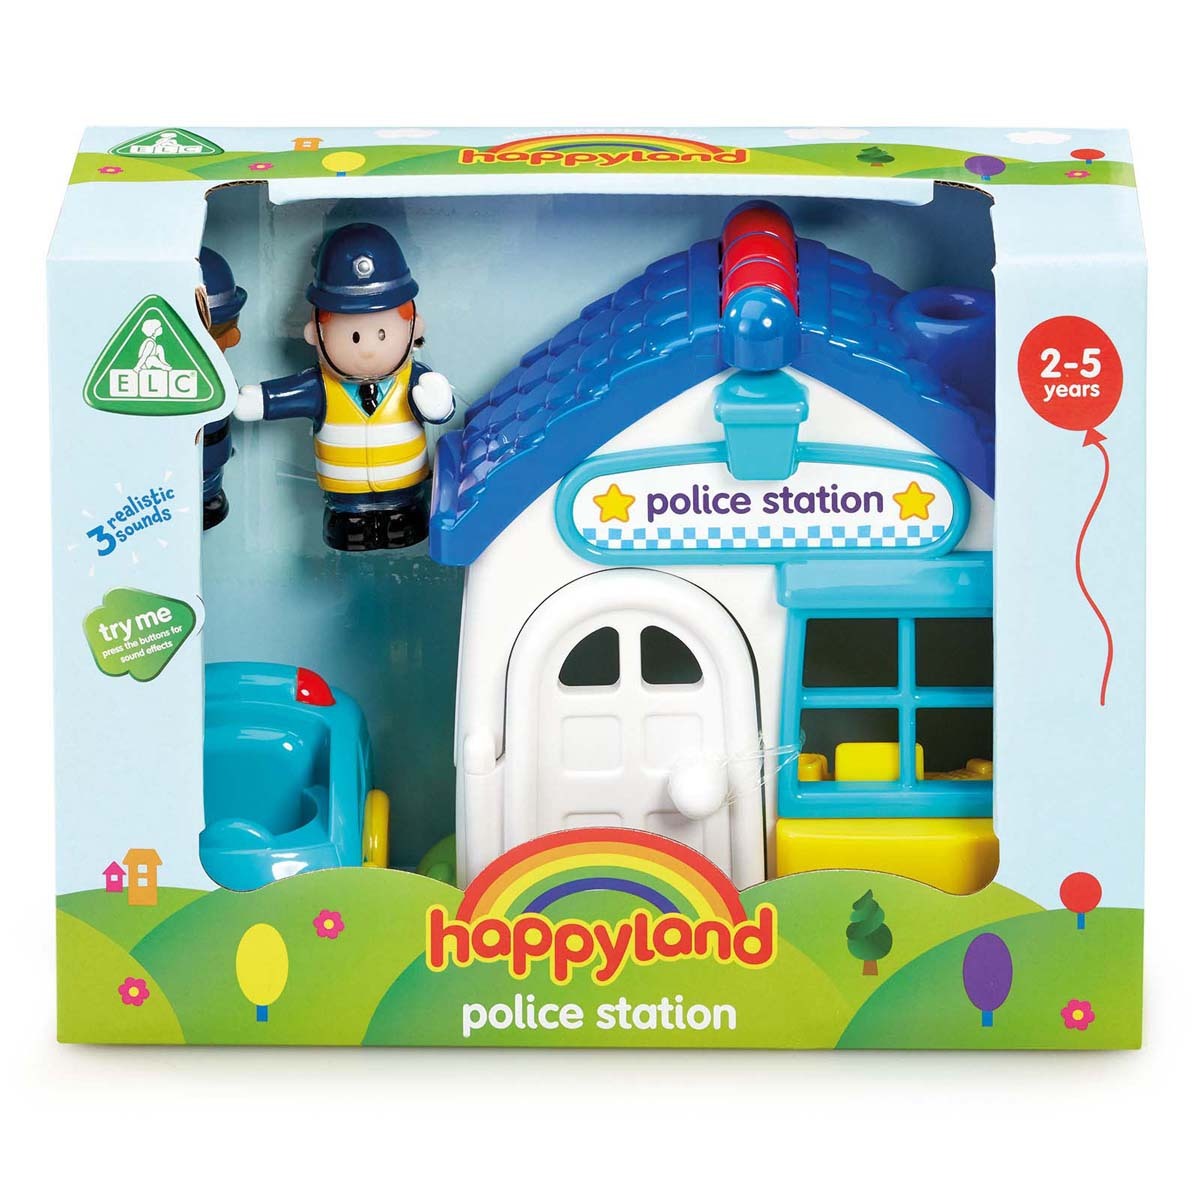 Happyland Police Station Playset